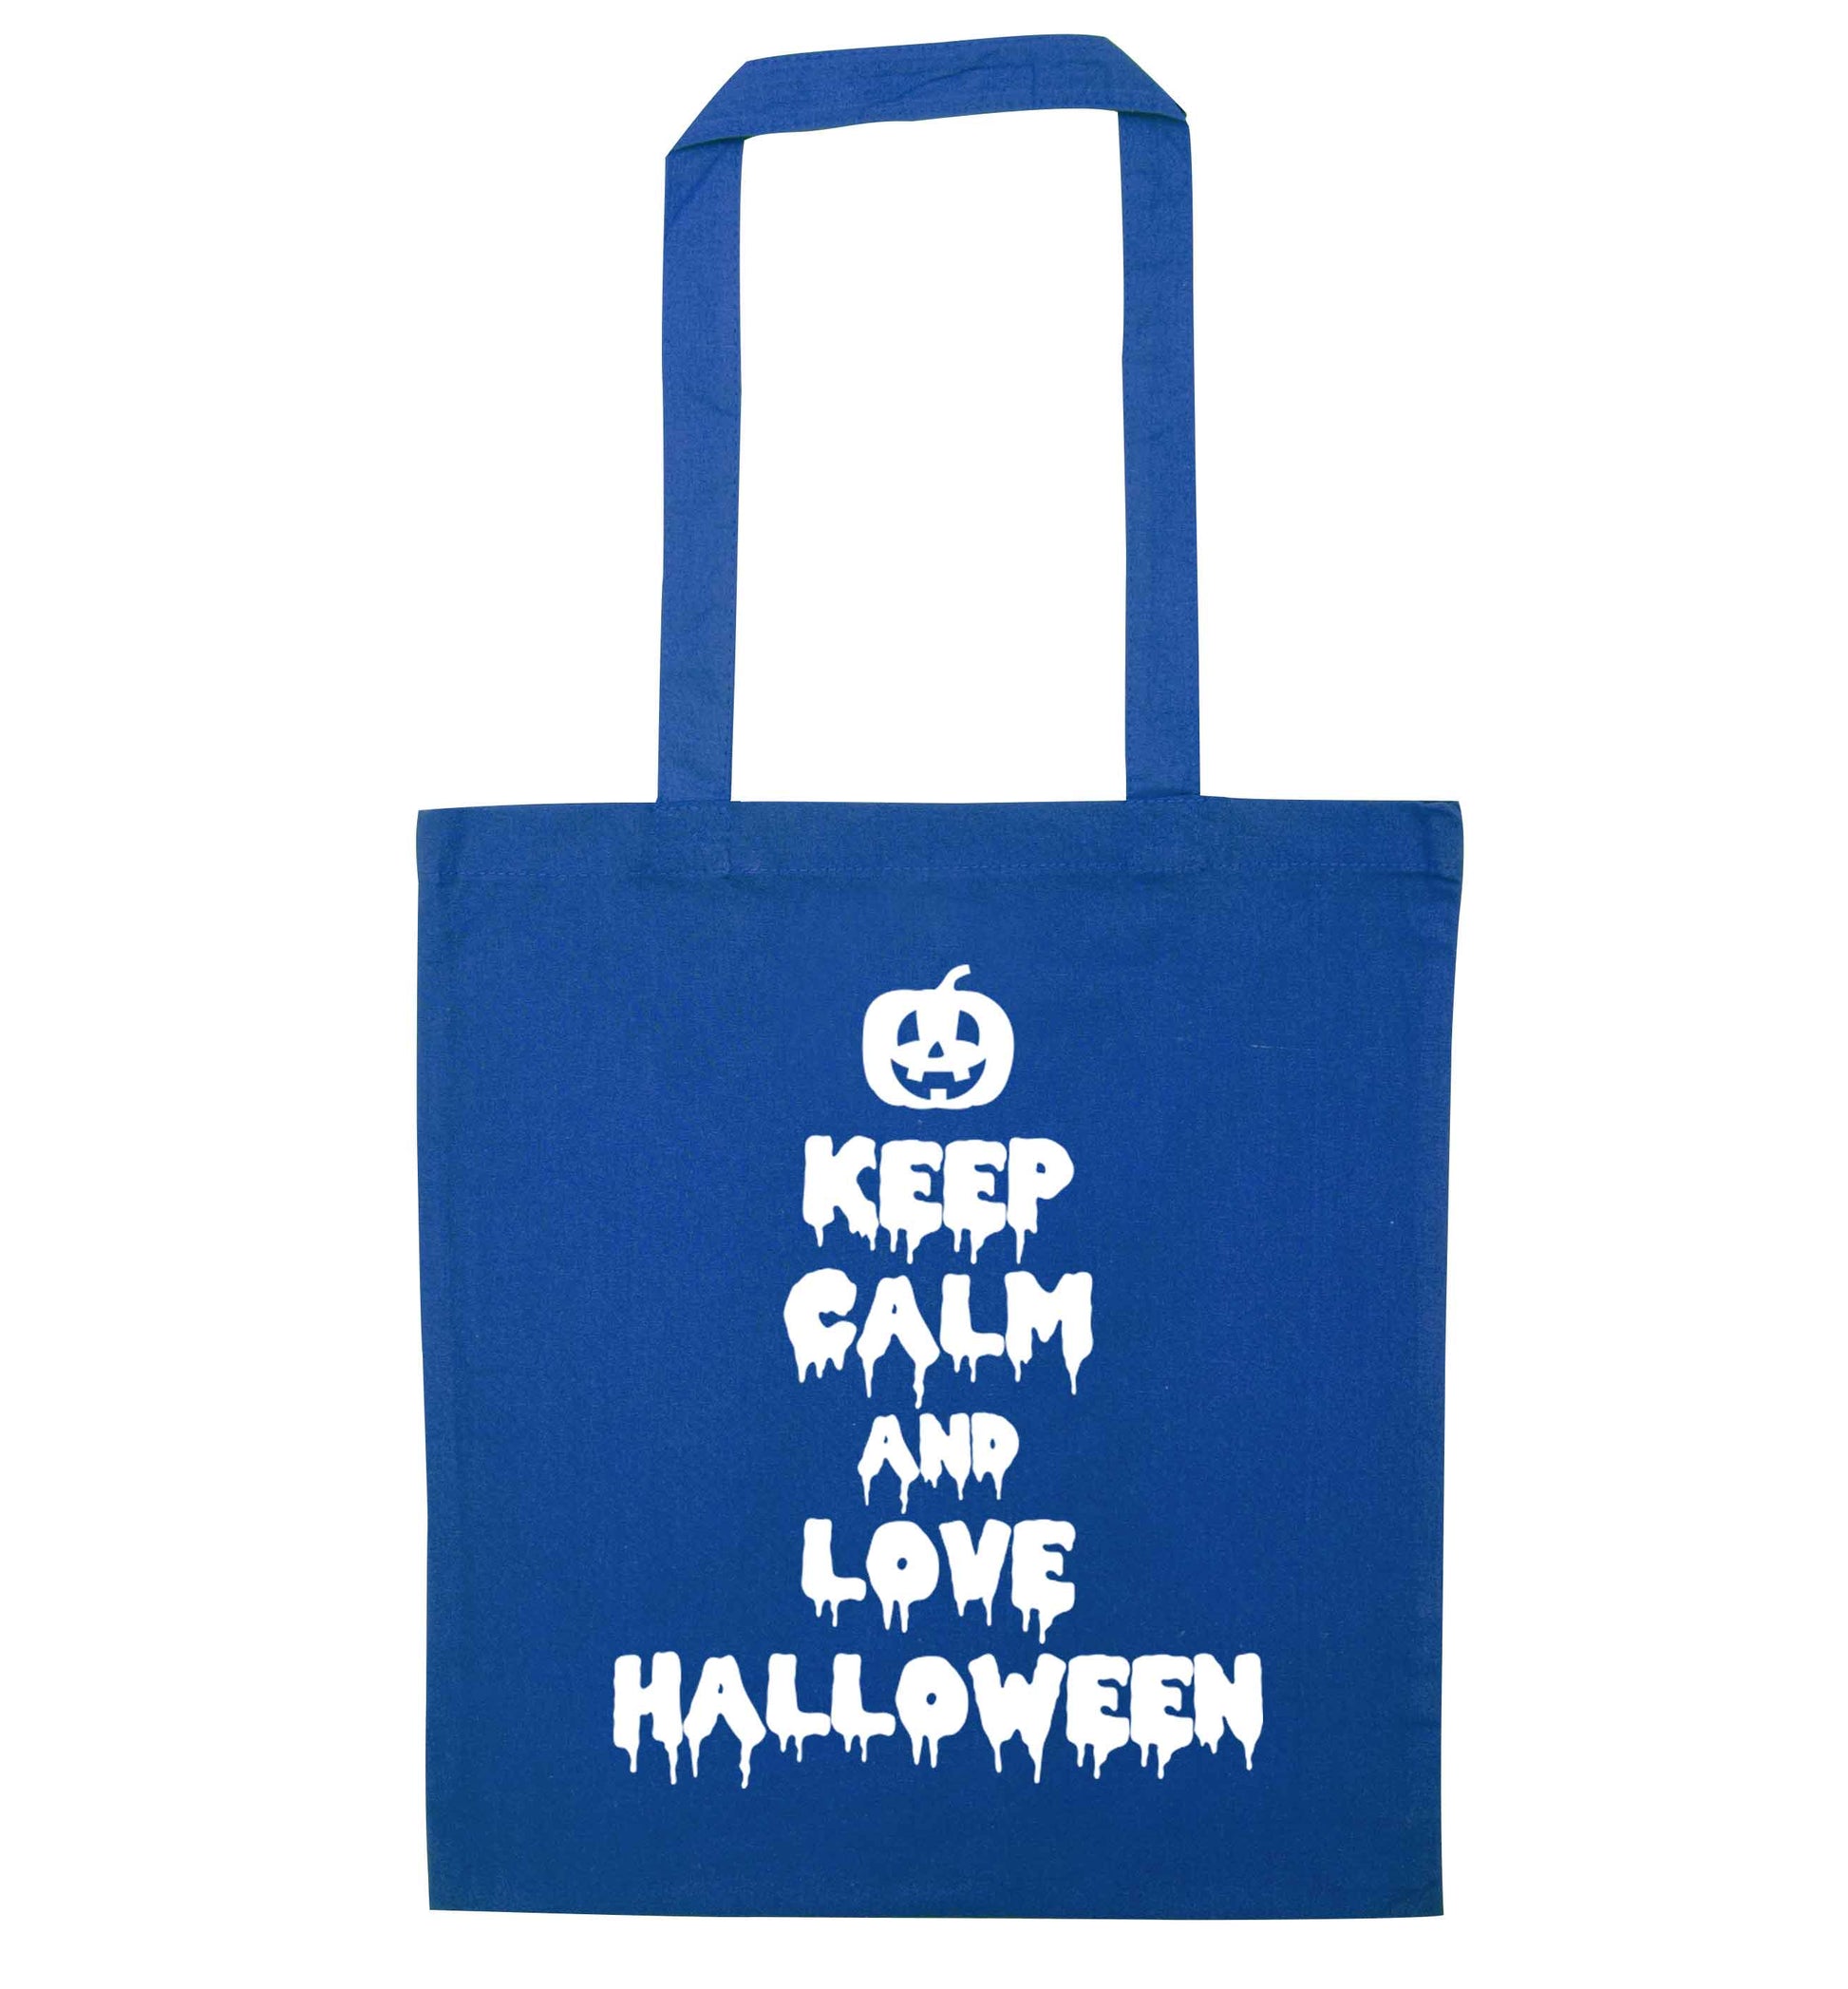 Keep calm and love halloween blue tote bag